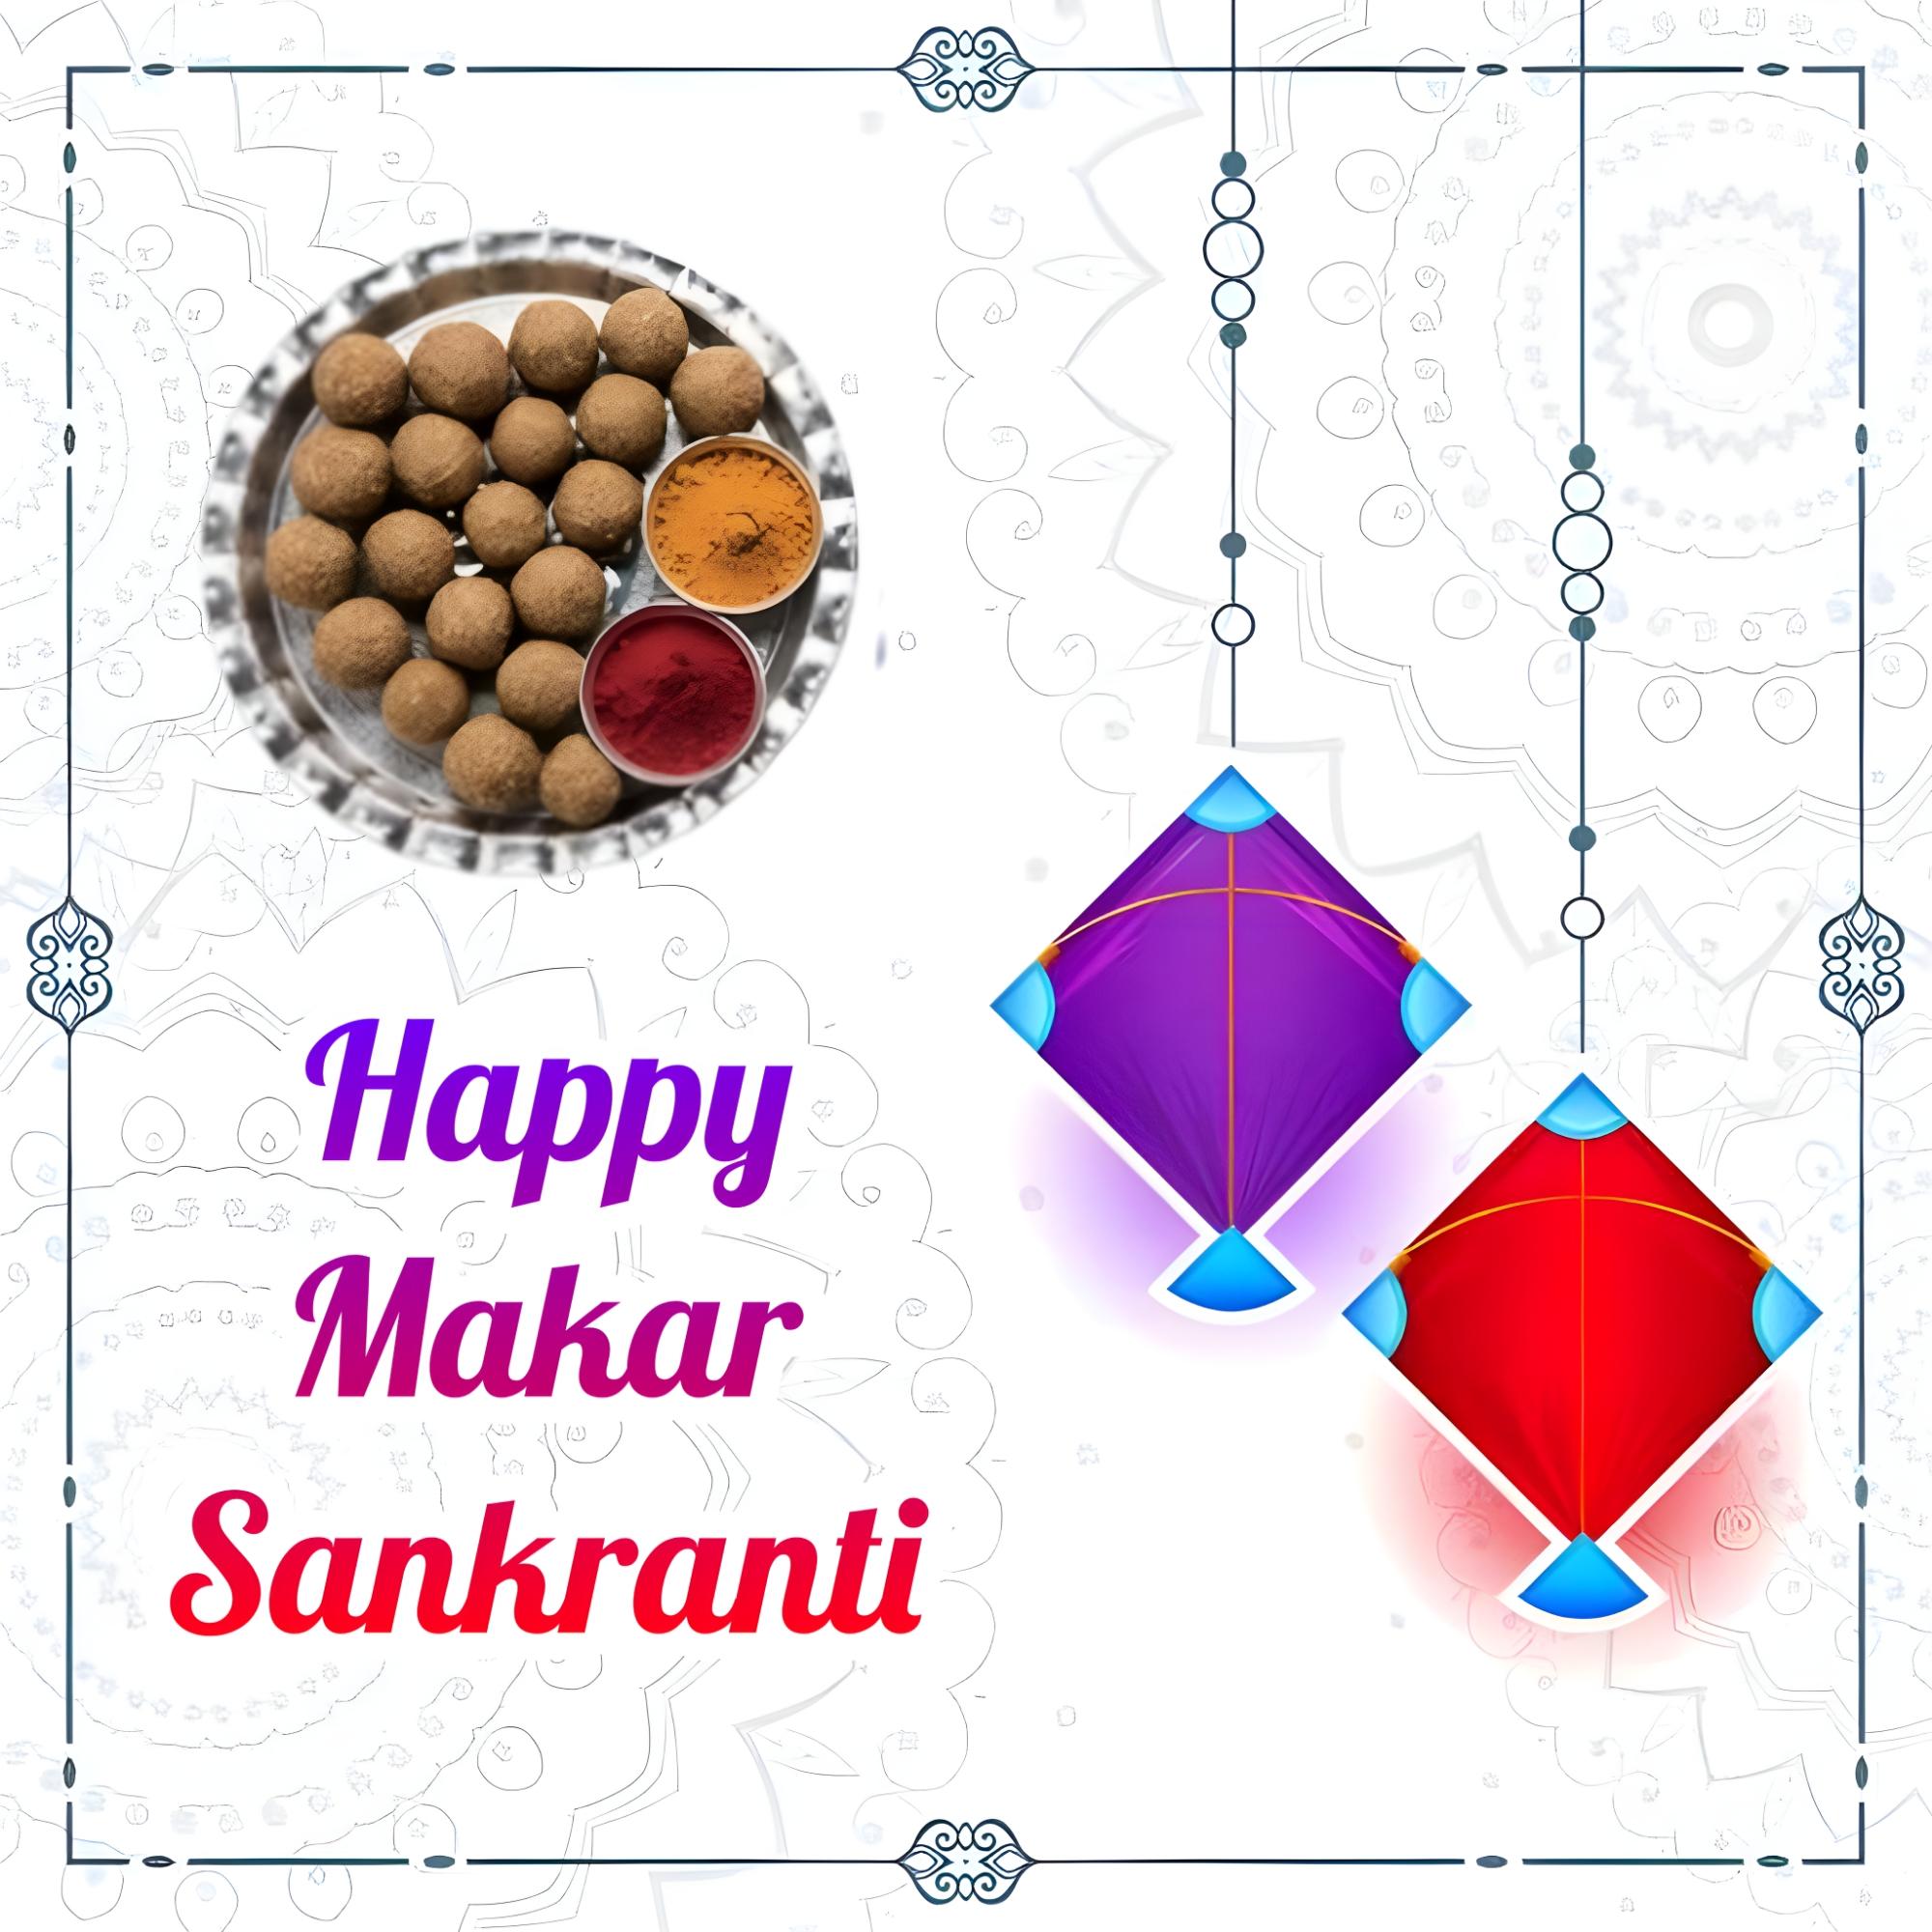 Whatsapp Happy Makar Sankranti Images